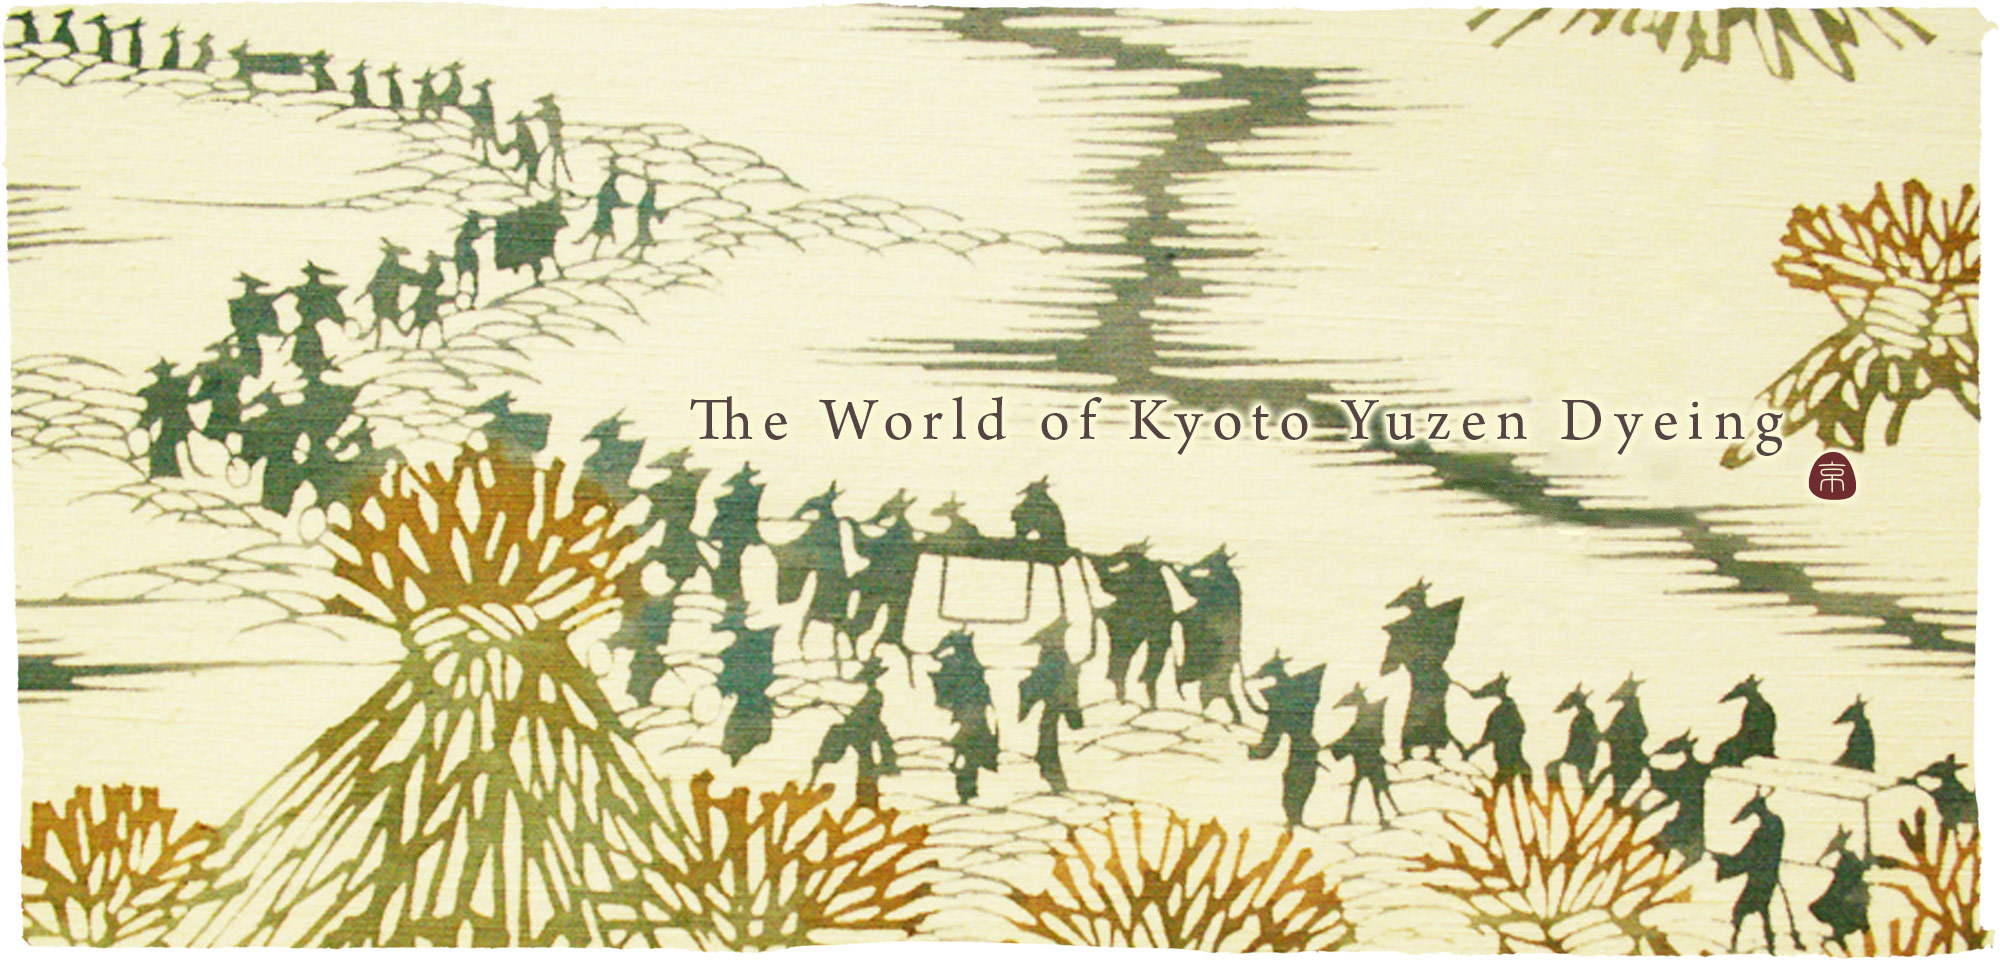 The World of Kyoto Yuzen Dyeing